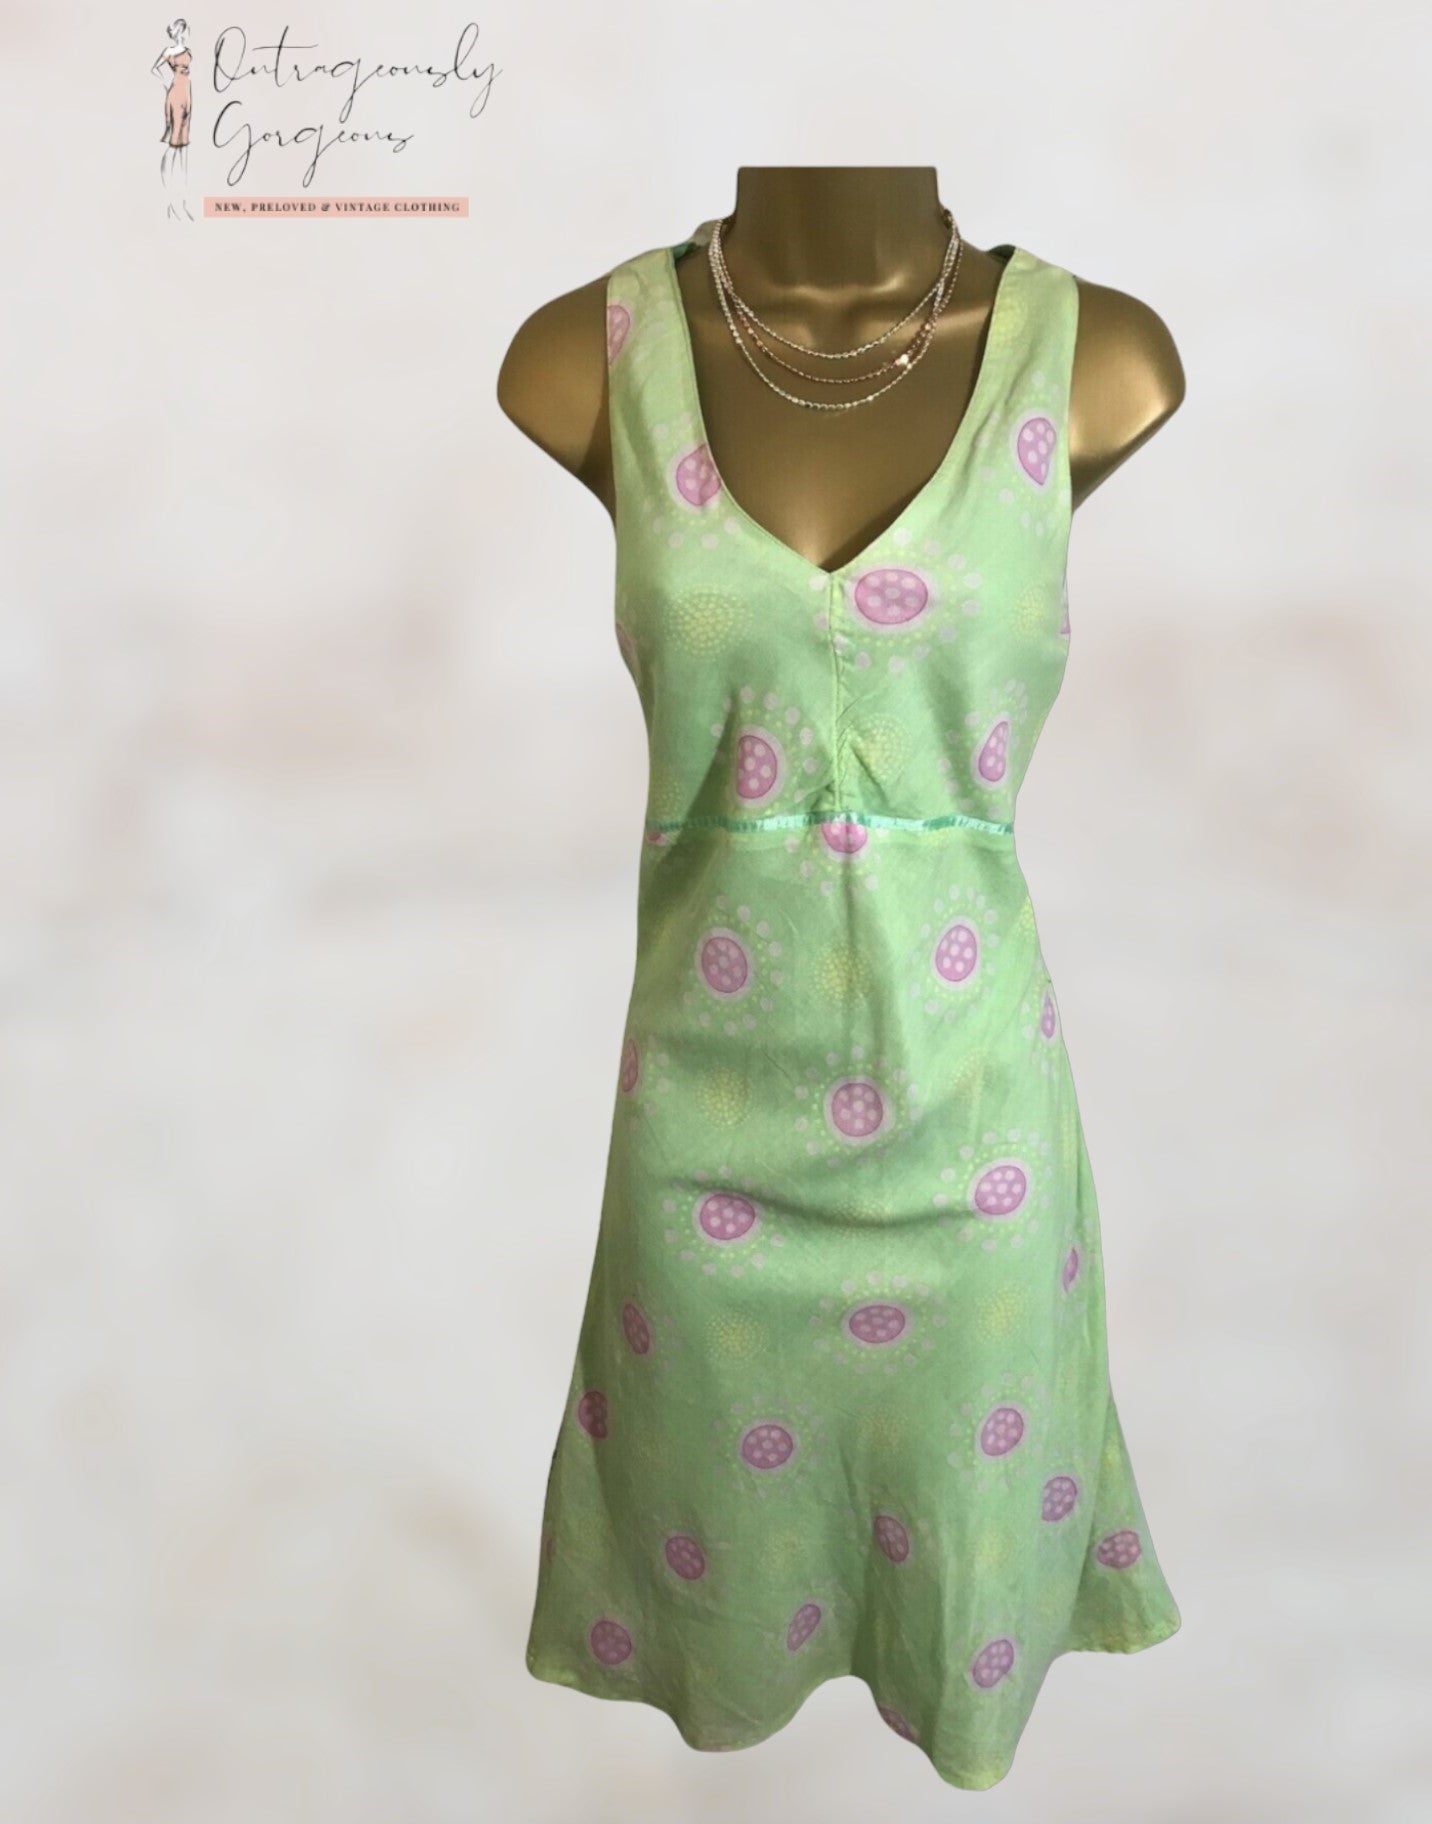 Joules Green & Pink Cotton Summer Dress UK 8 US 4 EU 36 Timeless Fashions